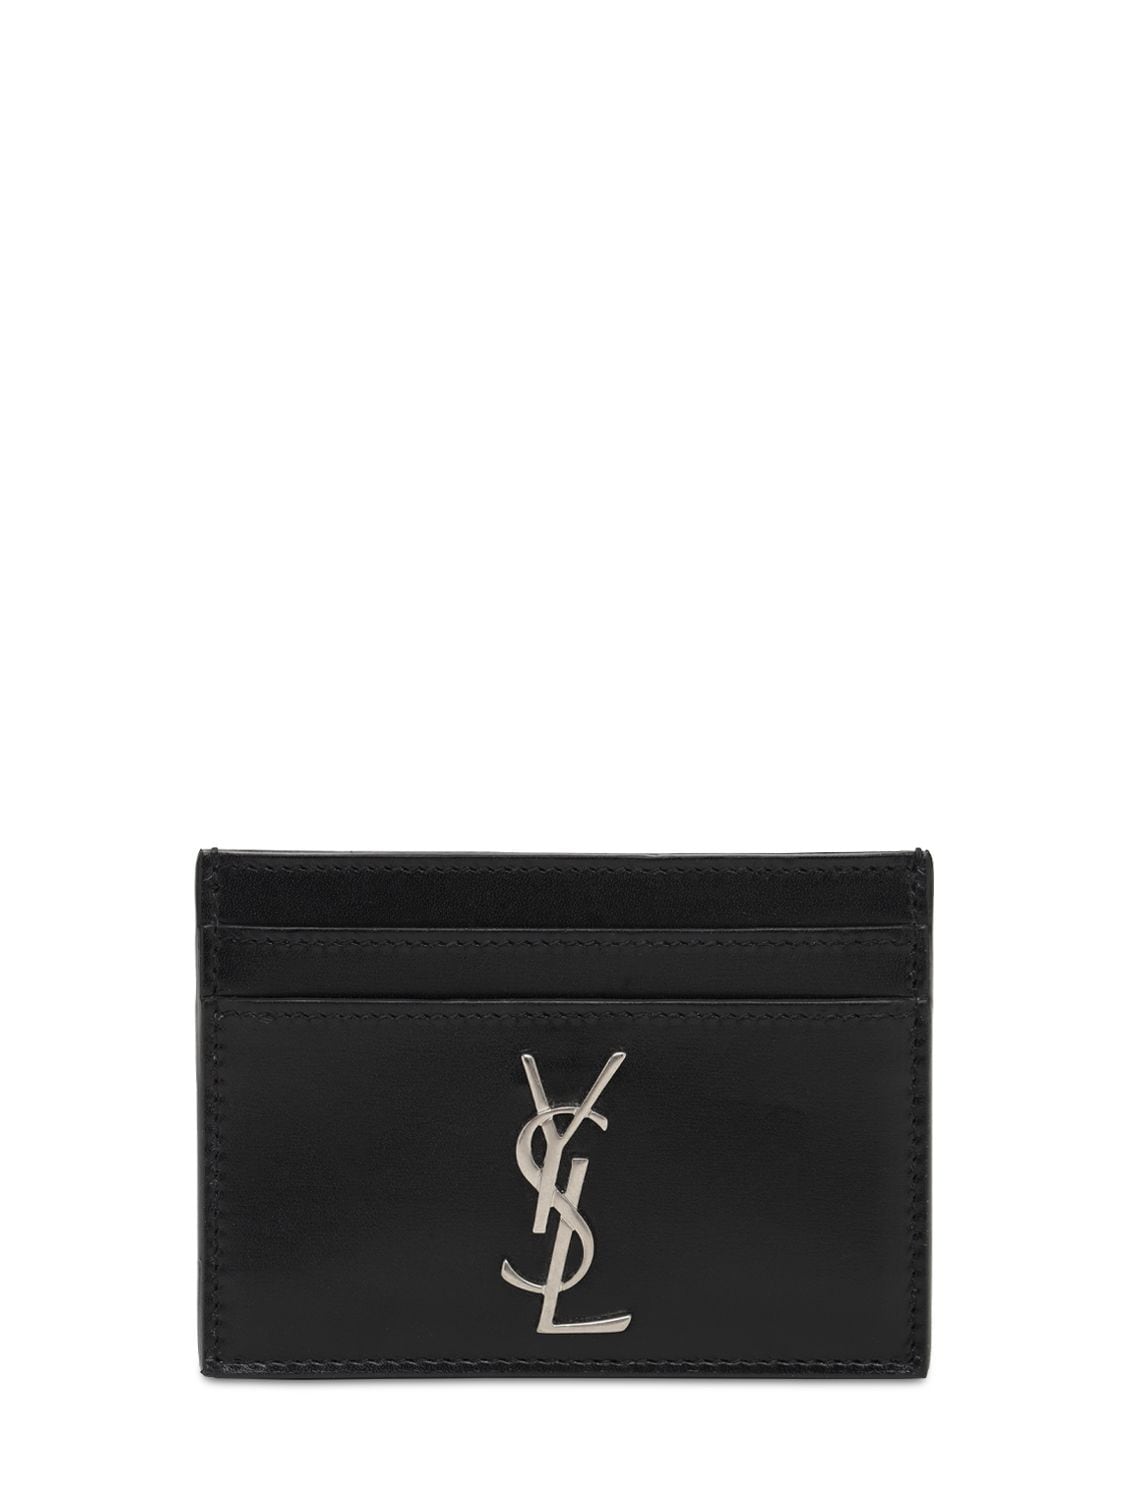 Saint Laurent Monogram Leather Card Holder In Black